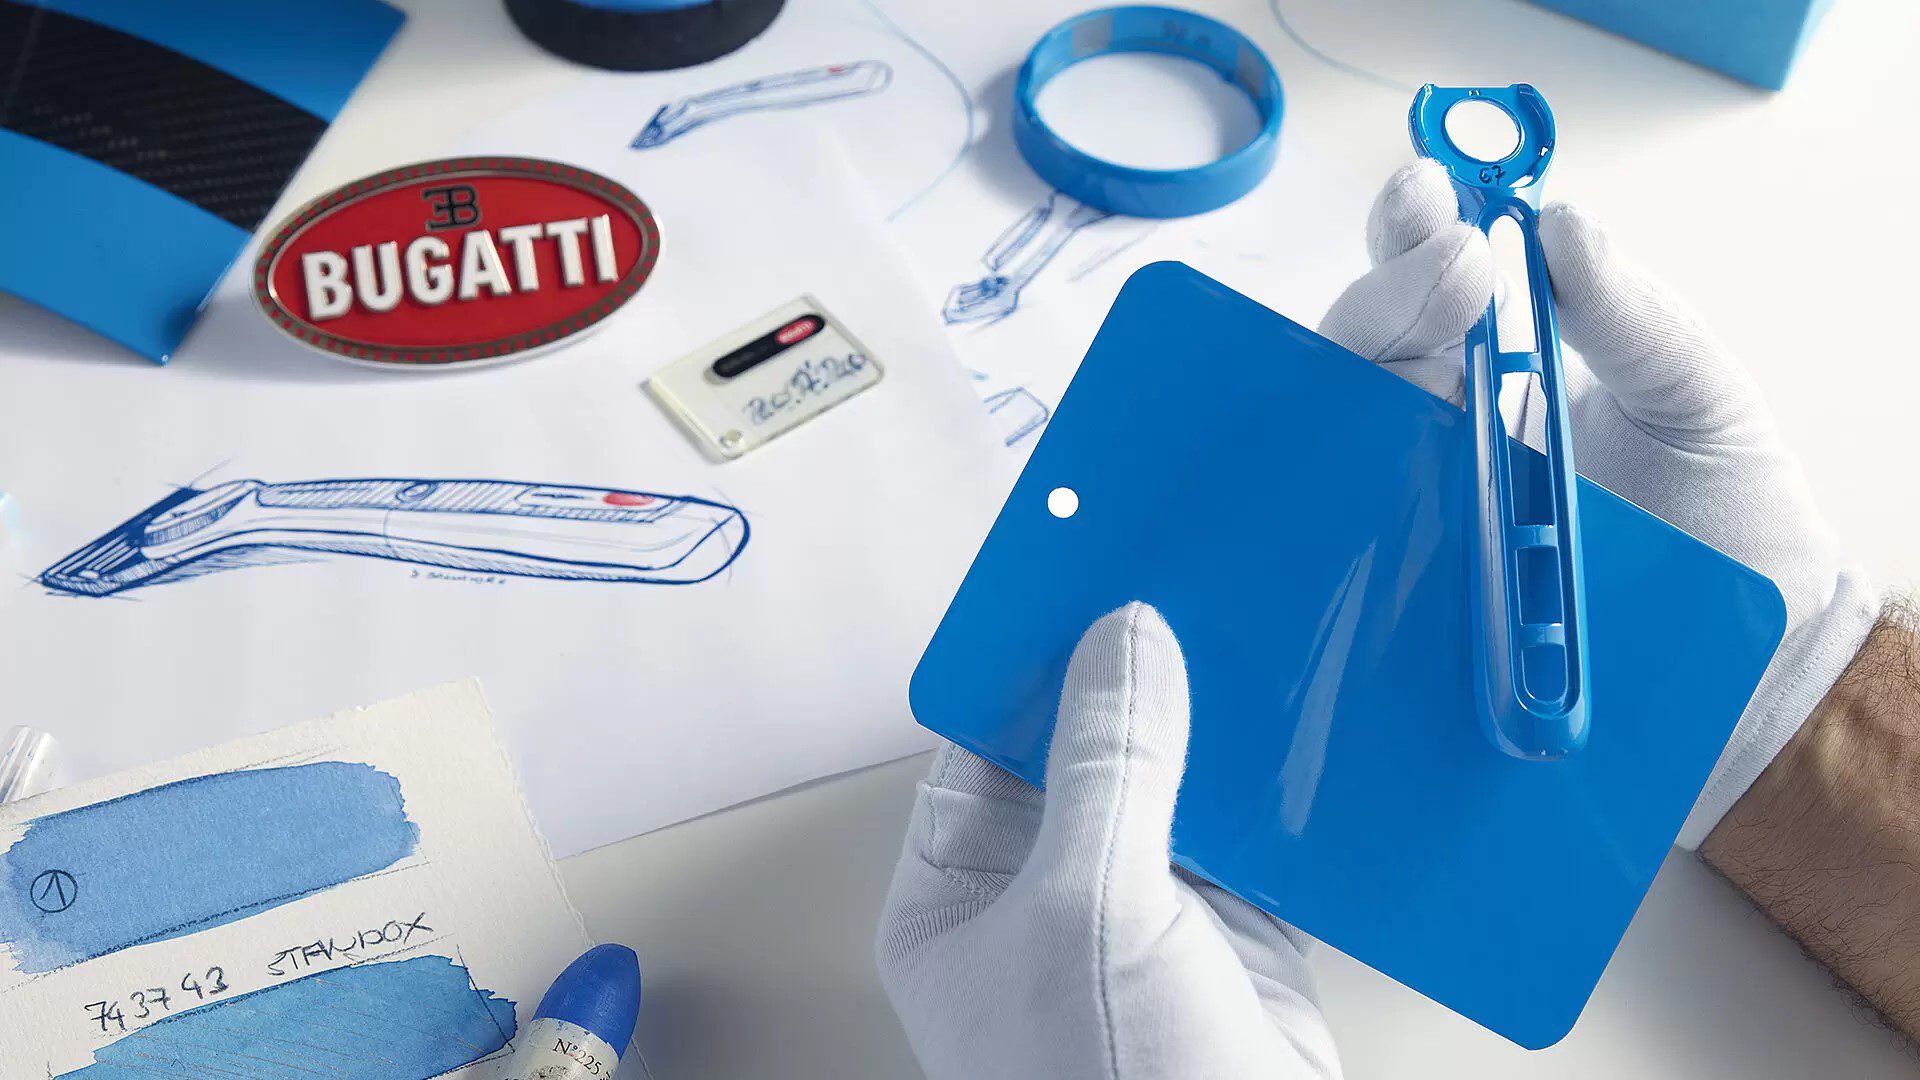 Development of the Bugatti GilletteLabs razor